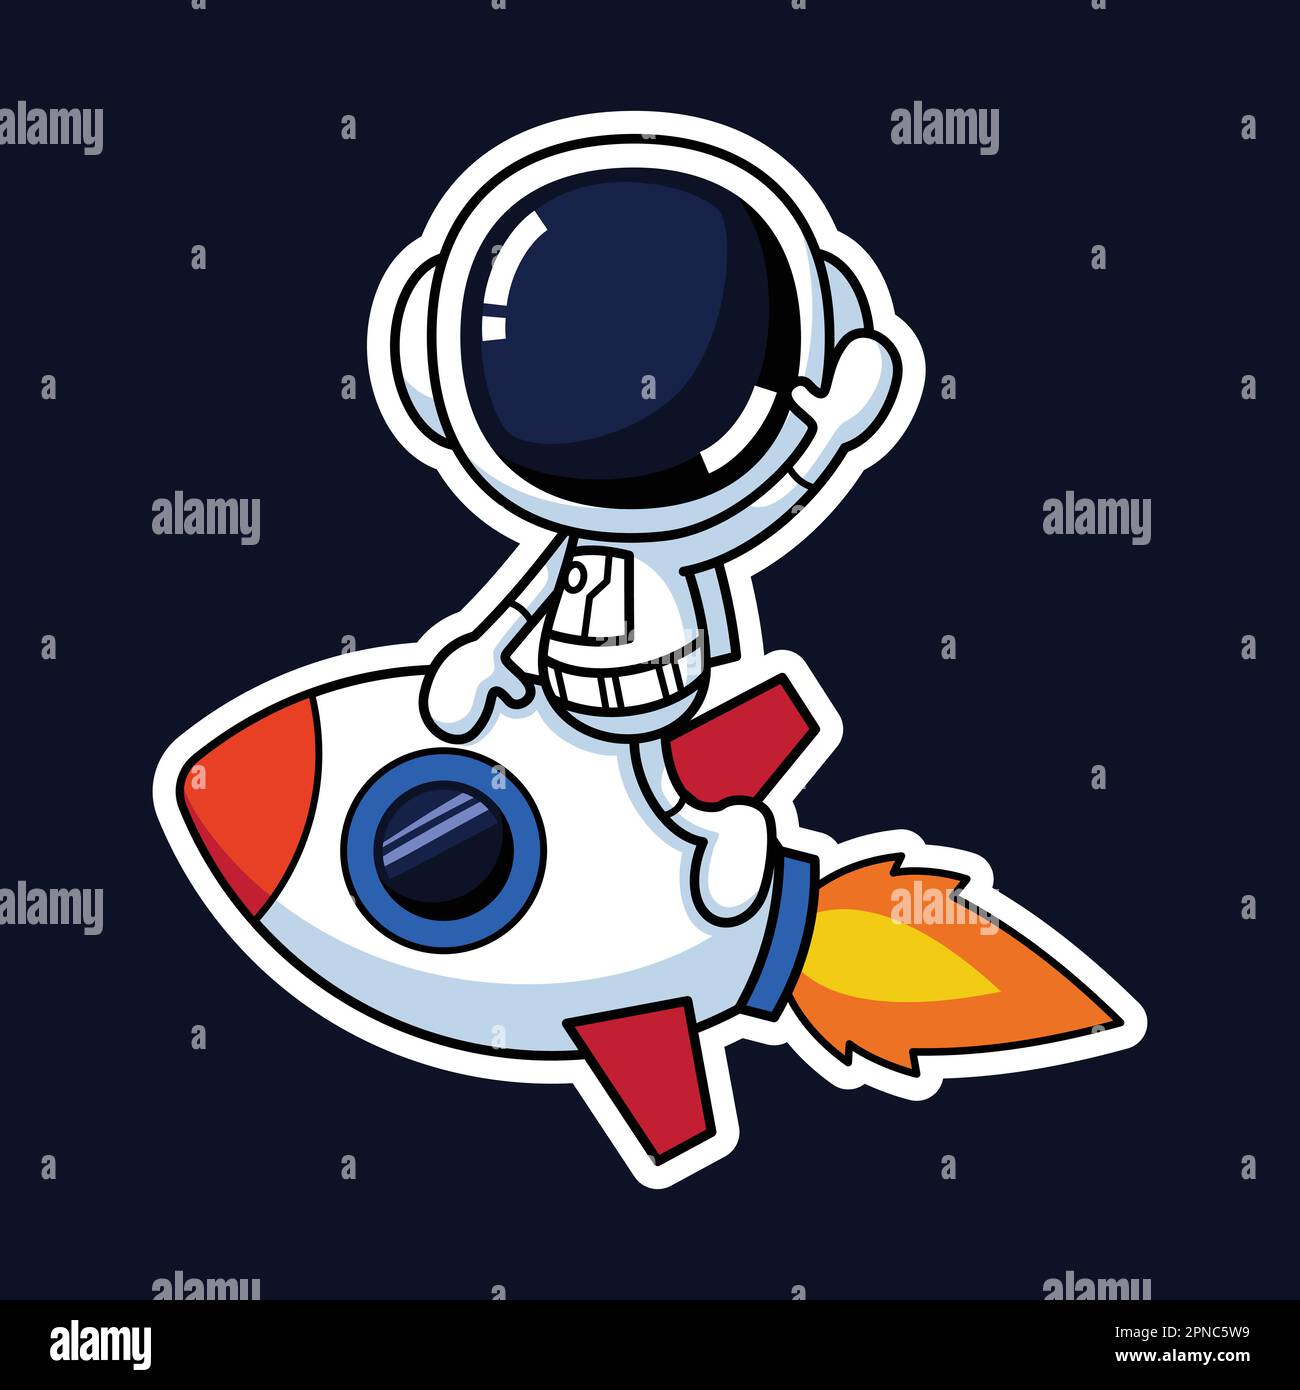 Cute Astronaut Cartoon Character Riding A Rocket. Premium Vector Graphic Asset. Stock Vector